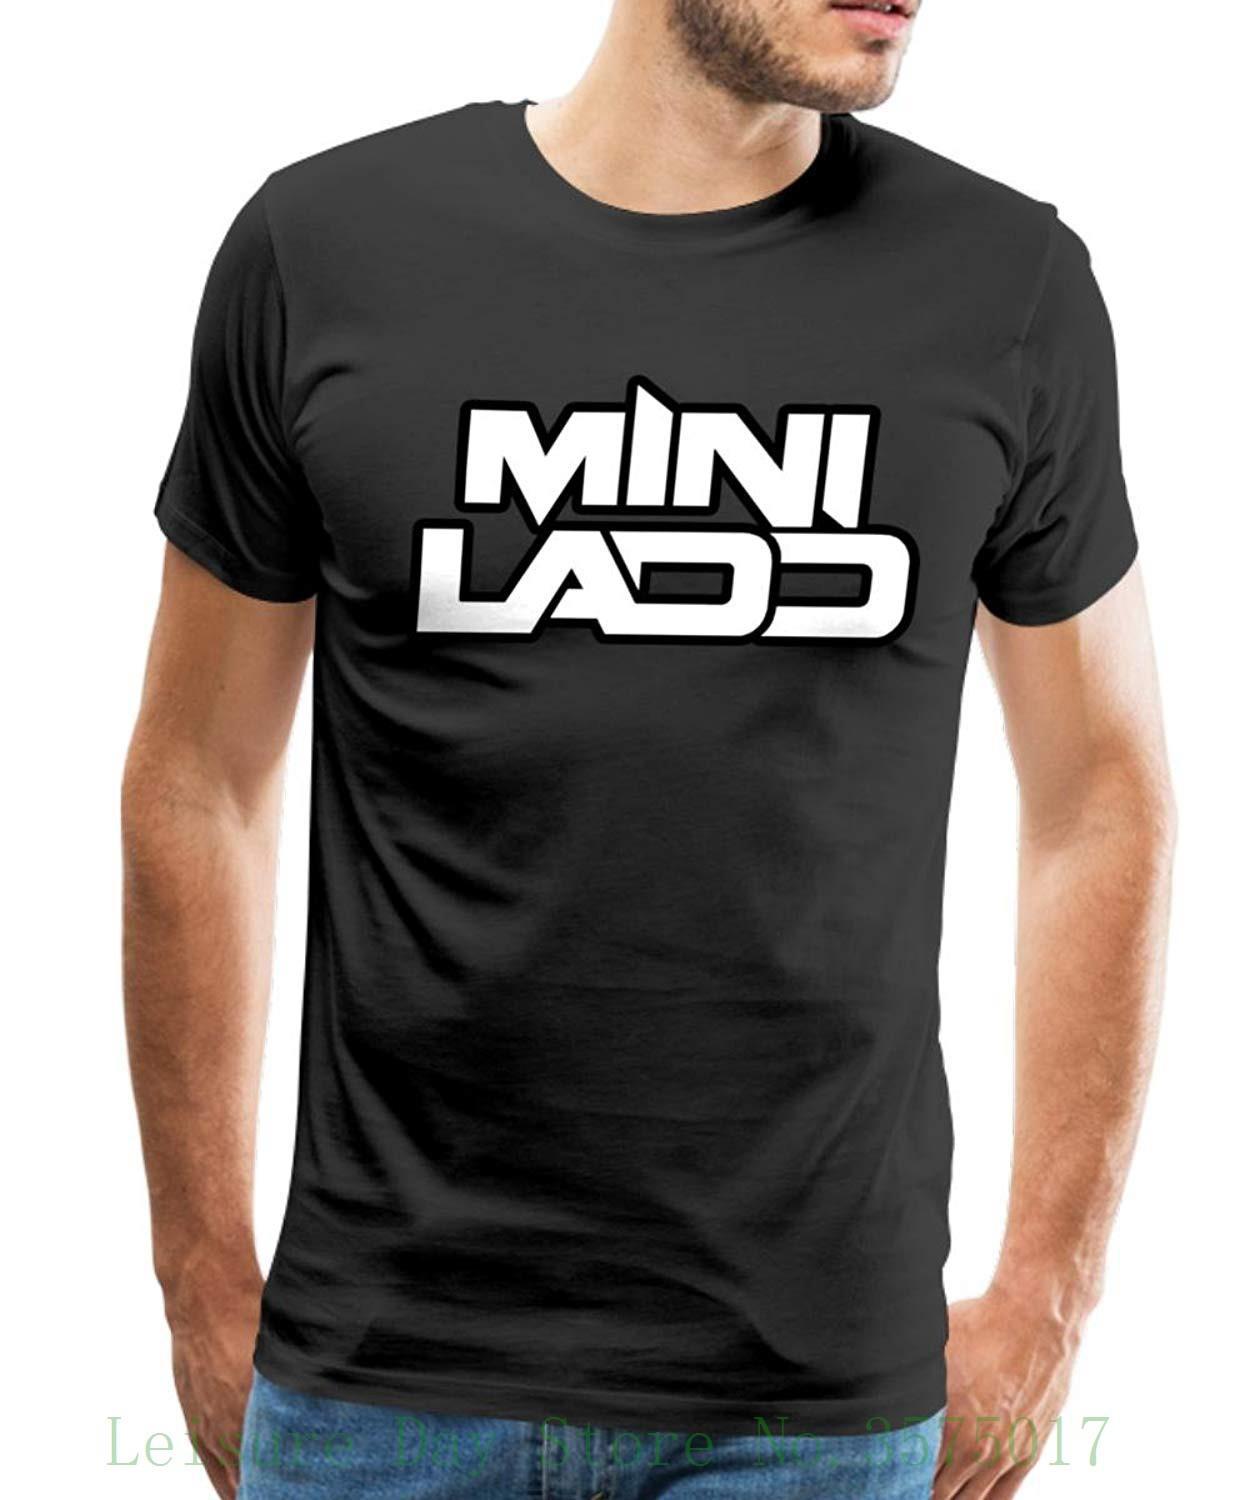 Ladd Logo - Mini Ladd Logo Men'S T Shirt Summer Short Sleeve Shirts Tops S~3xl ...